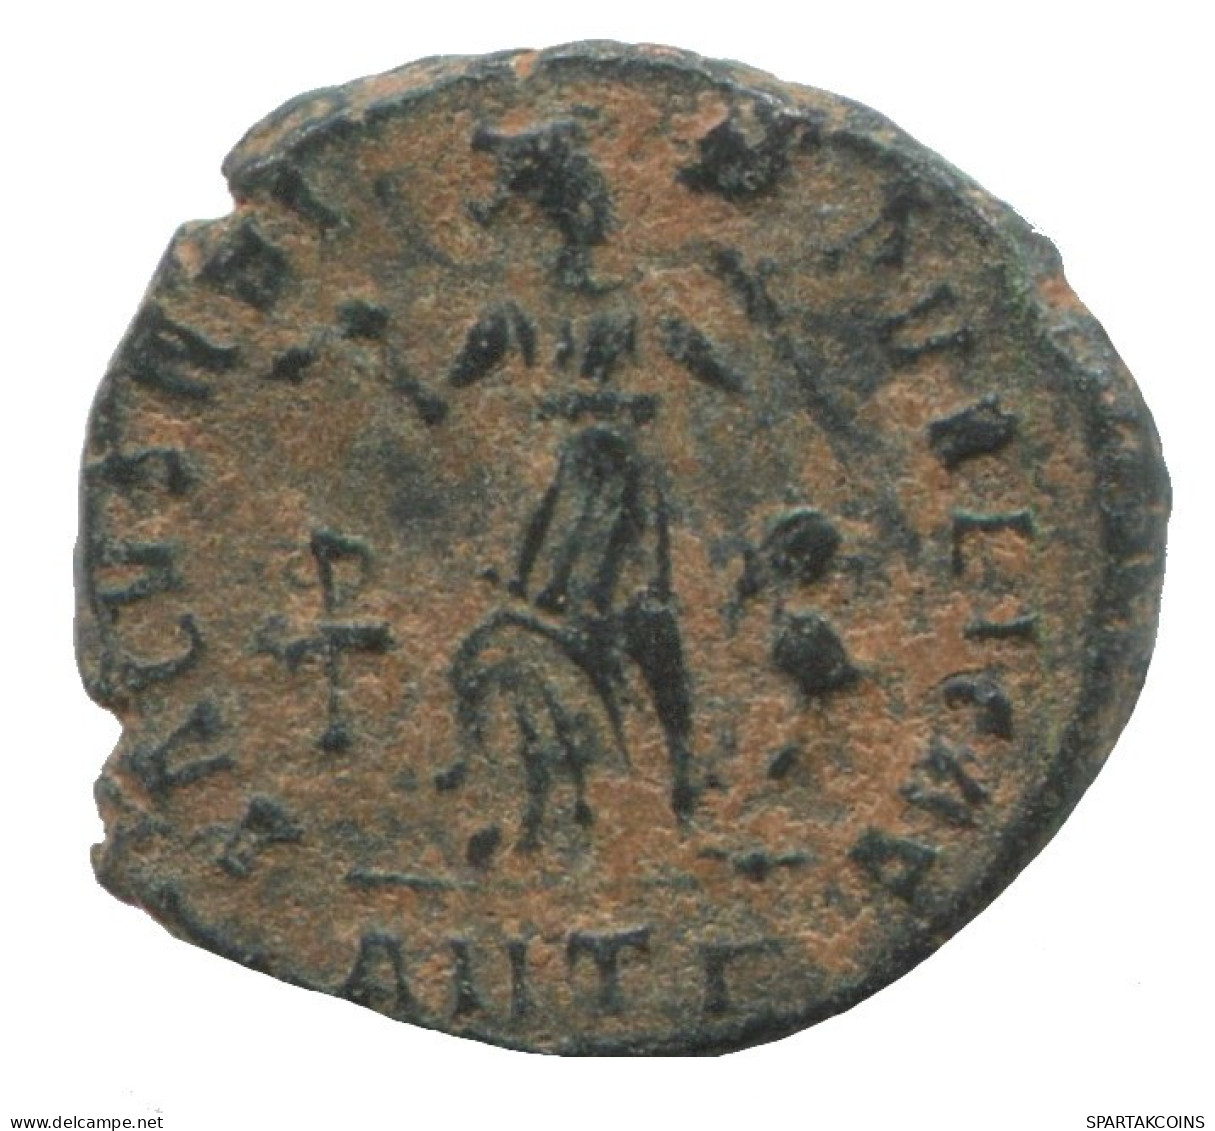 ARCADIUS ANTIOCH ANTГ AD388 SALVS REI-PVBLICAE VICTORY 1.2g/15m #ANN1590.10.D.A - El Bajo Imperio Romano (363 / 476)